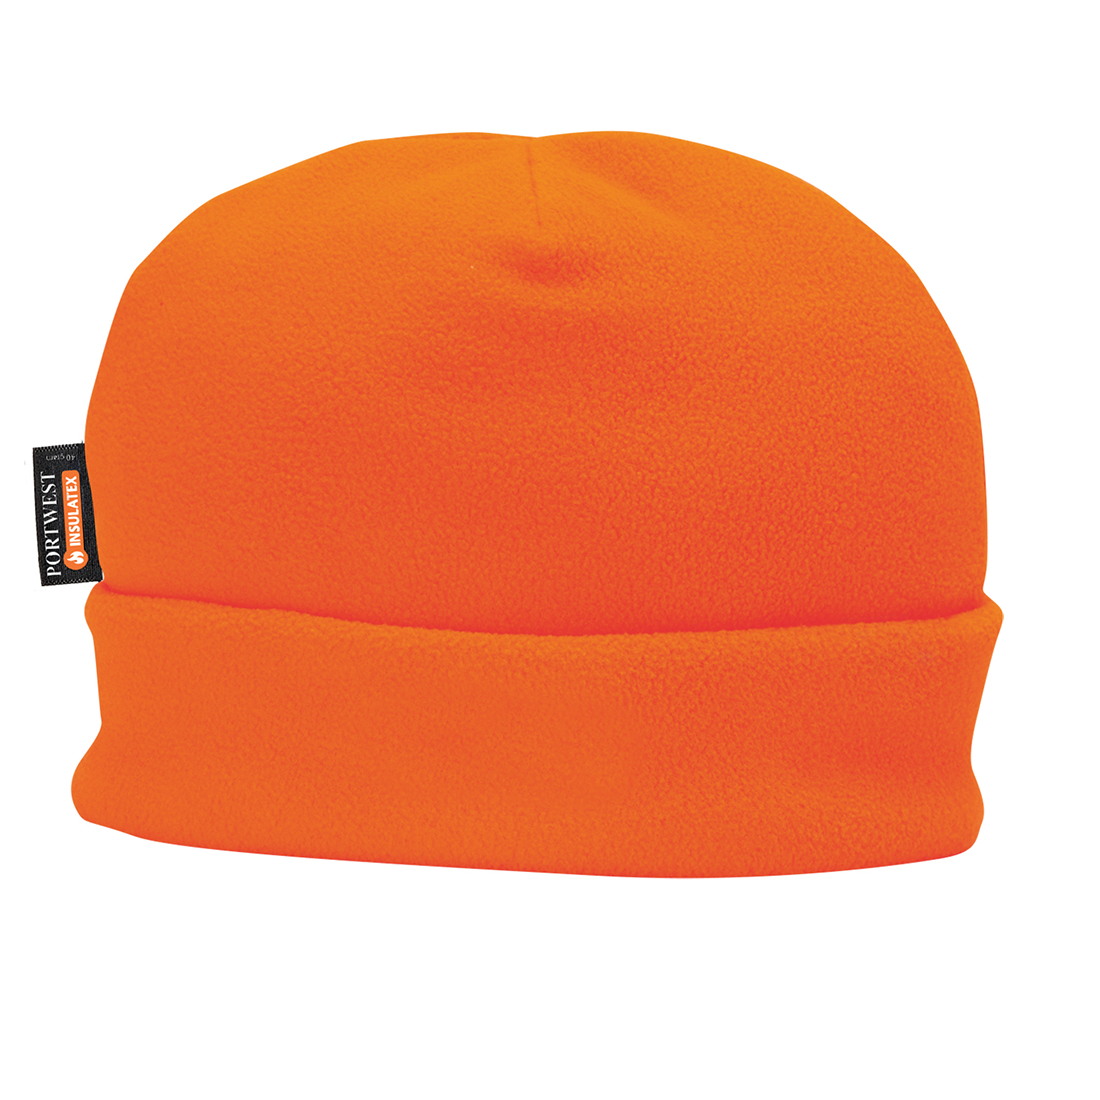 Fleece Hat Insulatex Lined Size  Orange